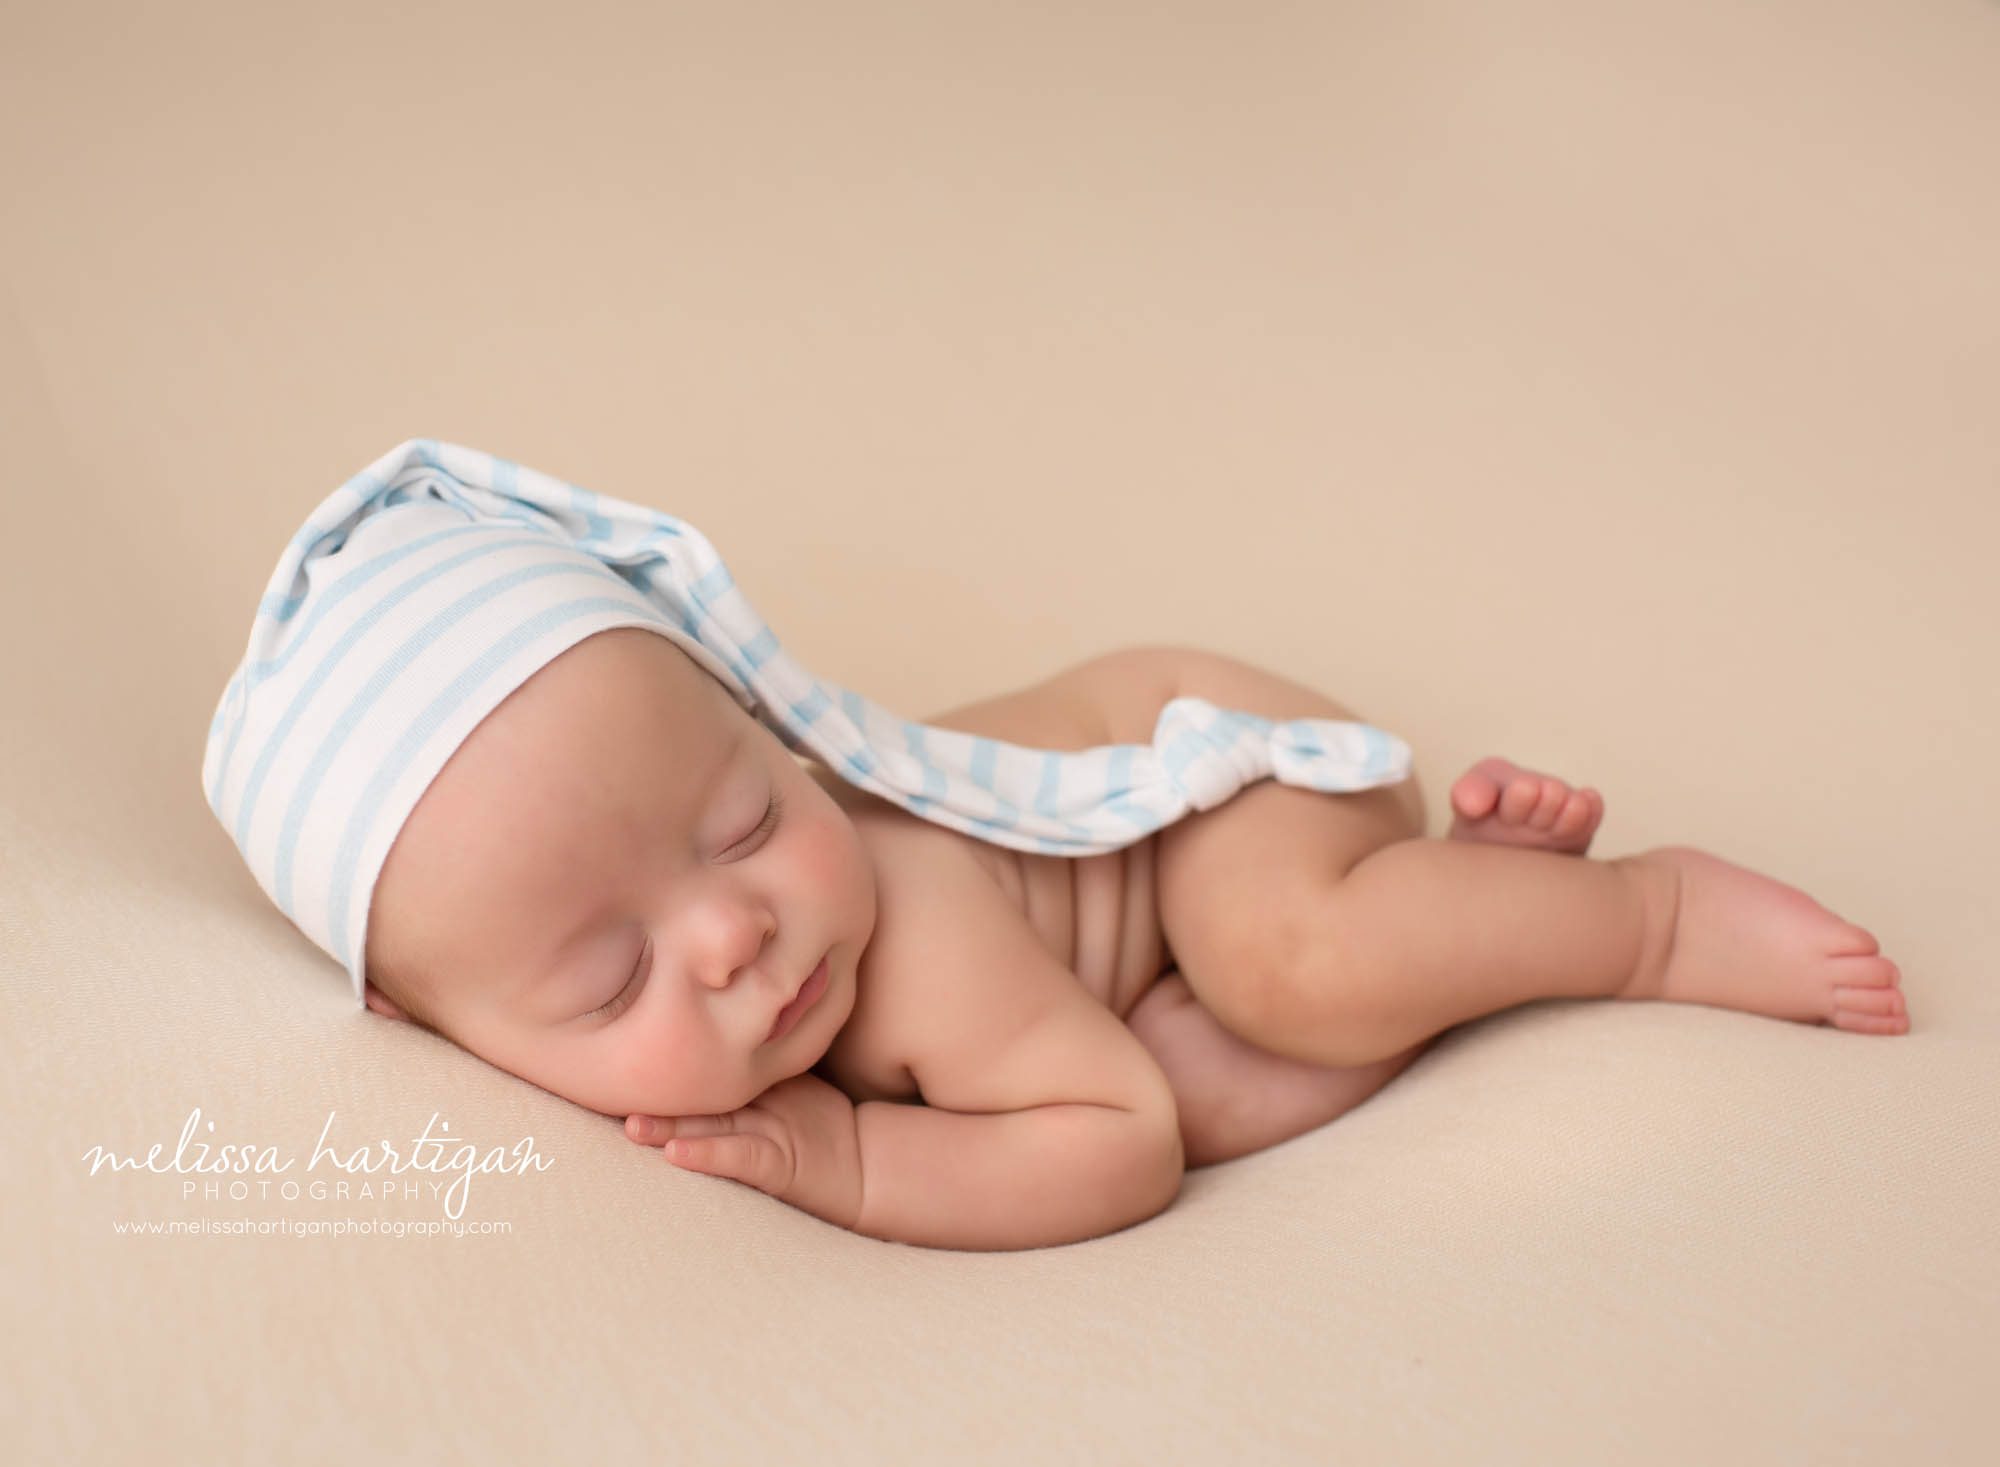 newborn baby boy pose don side with sleepy cap on